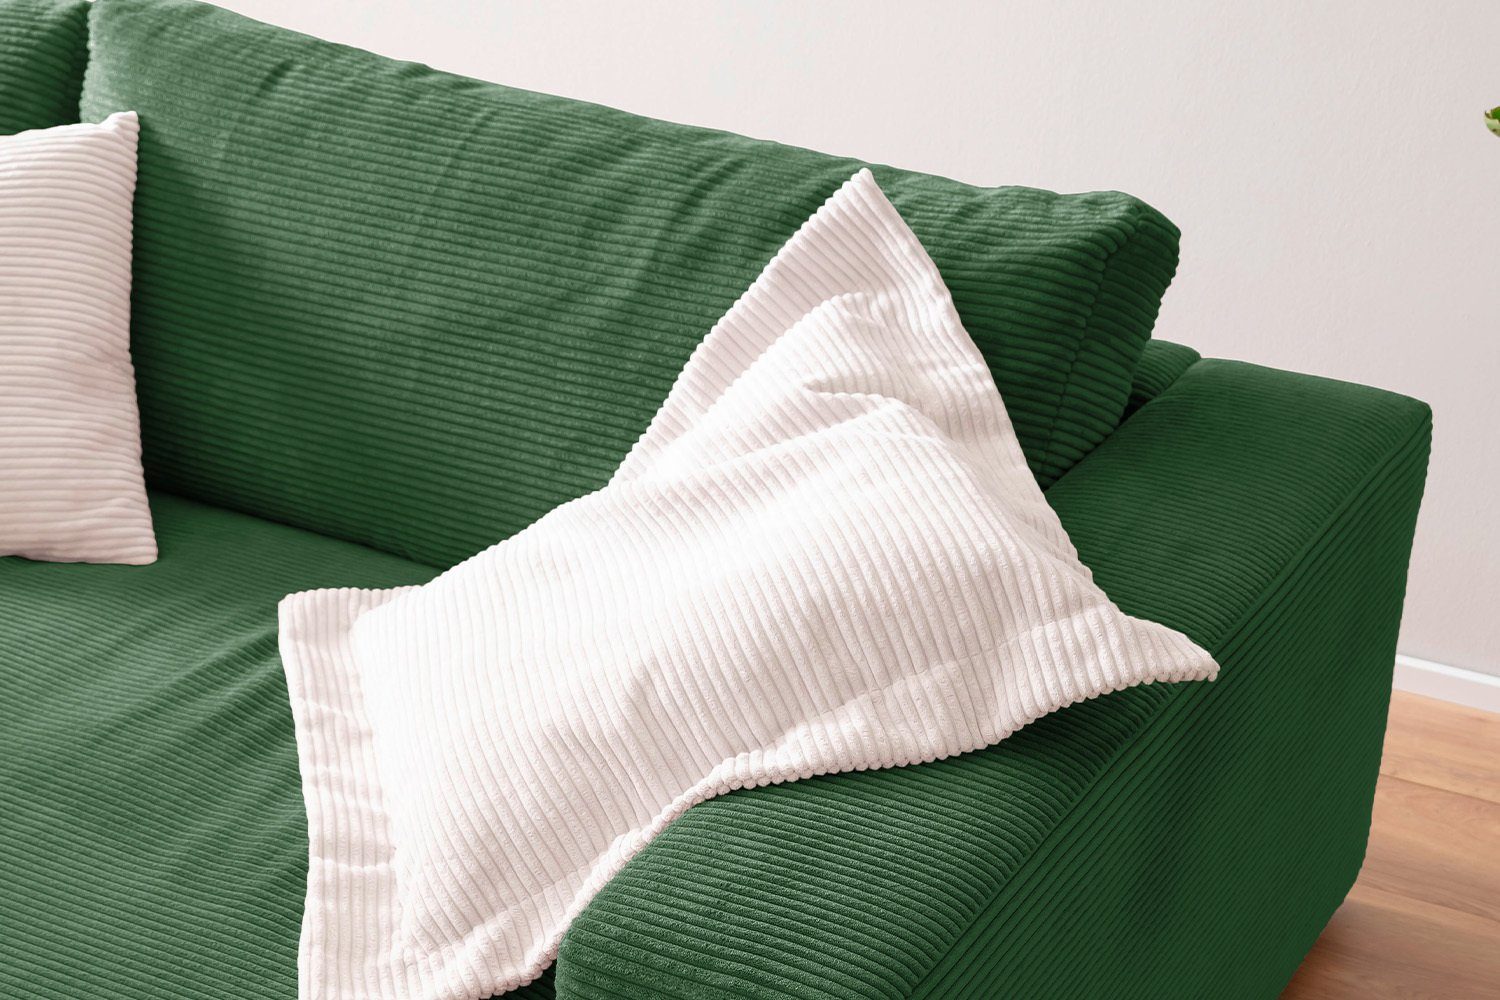 KAWOLA Big-Sofa MADELINE, verschiedene od. Sofa Stoff Farben Cord